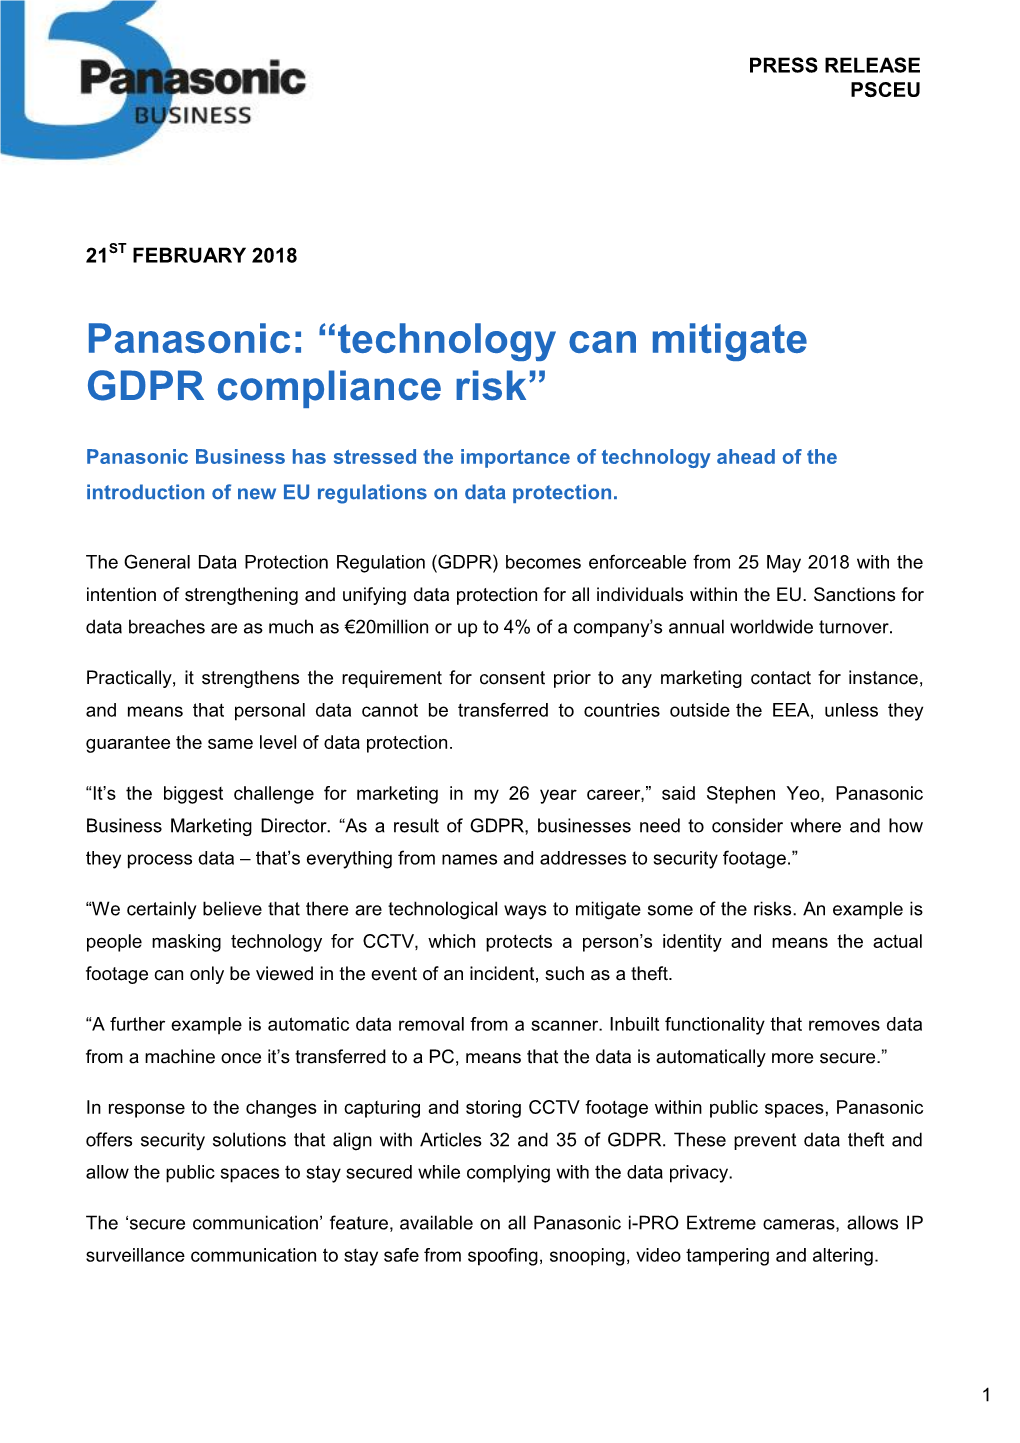 Panasonic: “Technology Can Mitigate GDPR Compliance Risk”